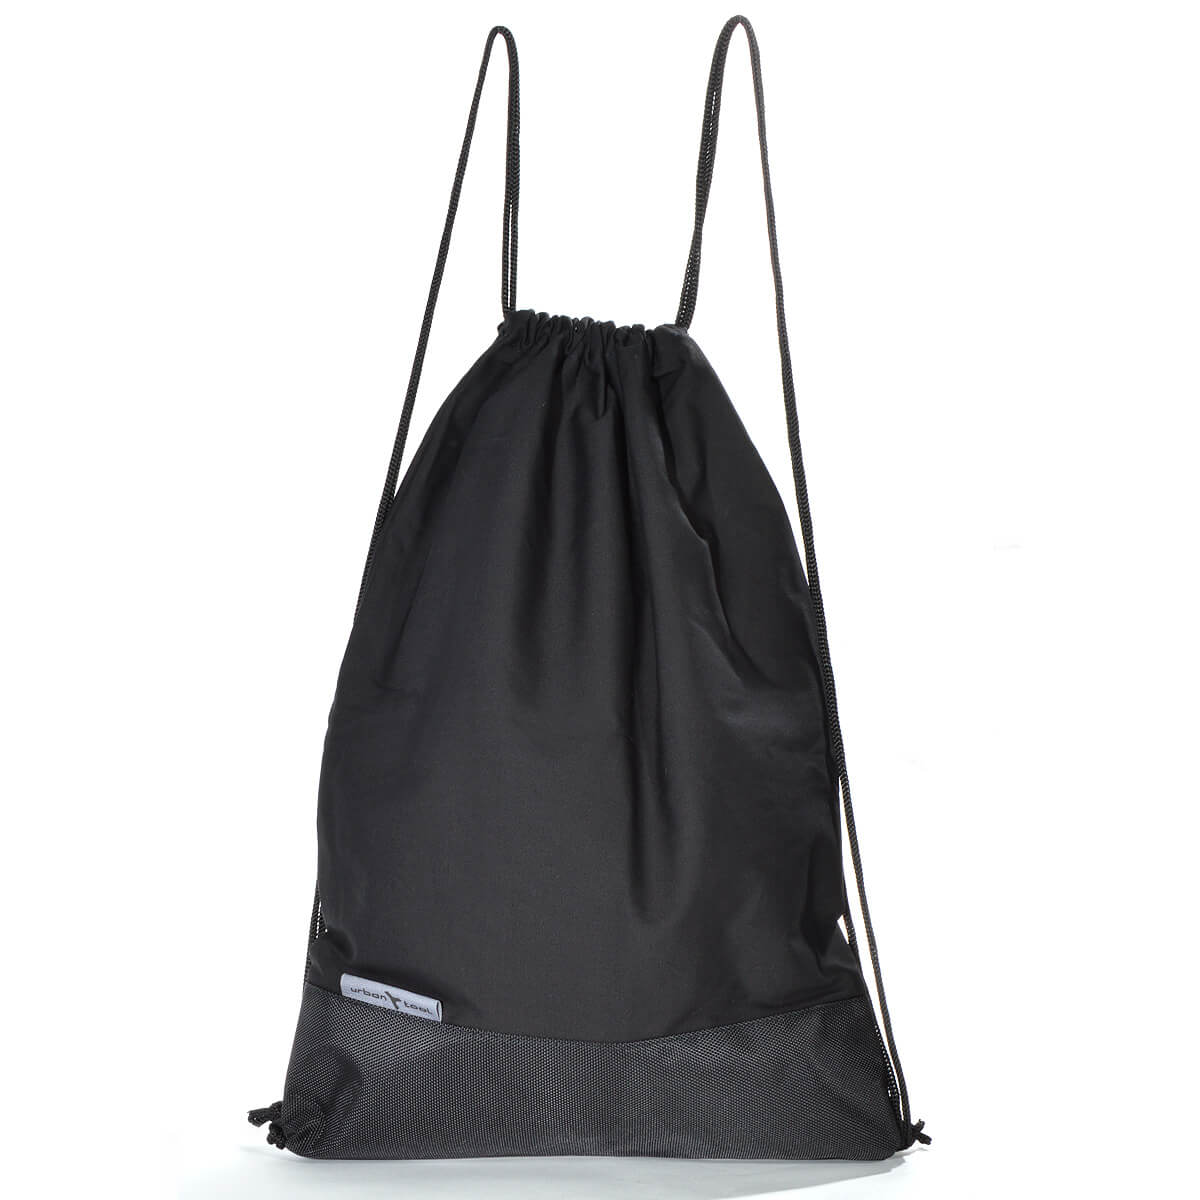 Drawstring hipster bag, organic cotton, with zipper pocket & yo-yo inside